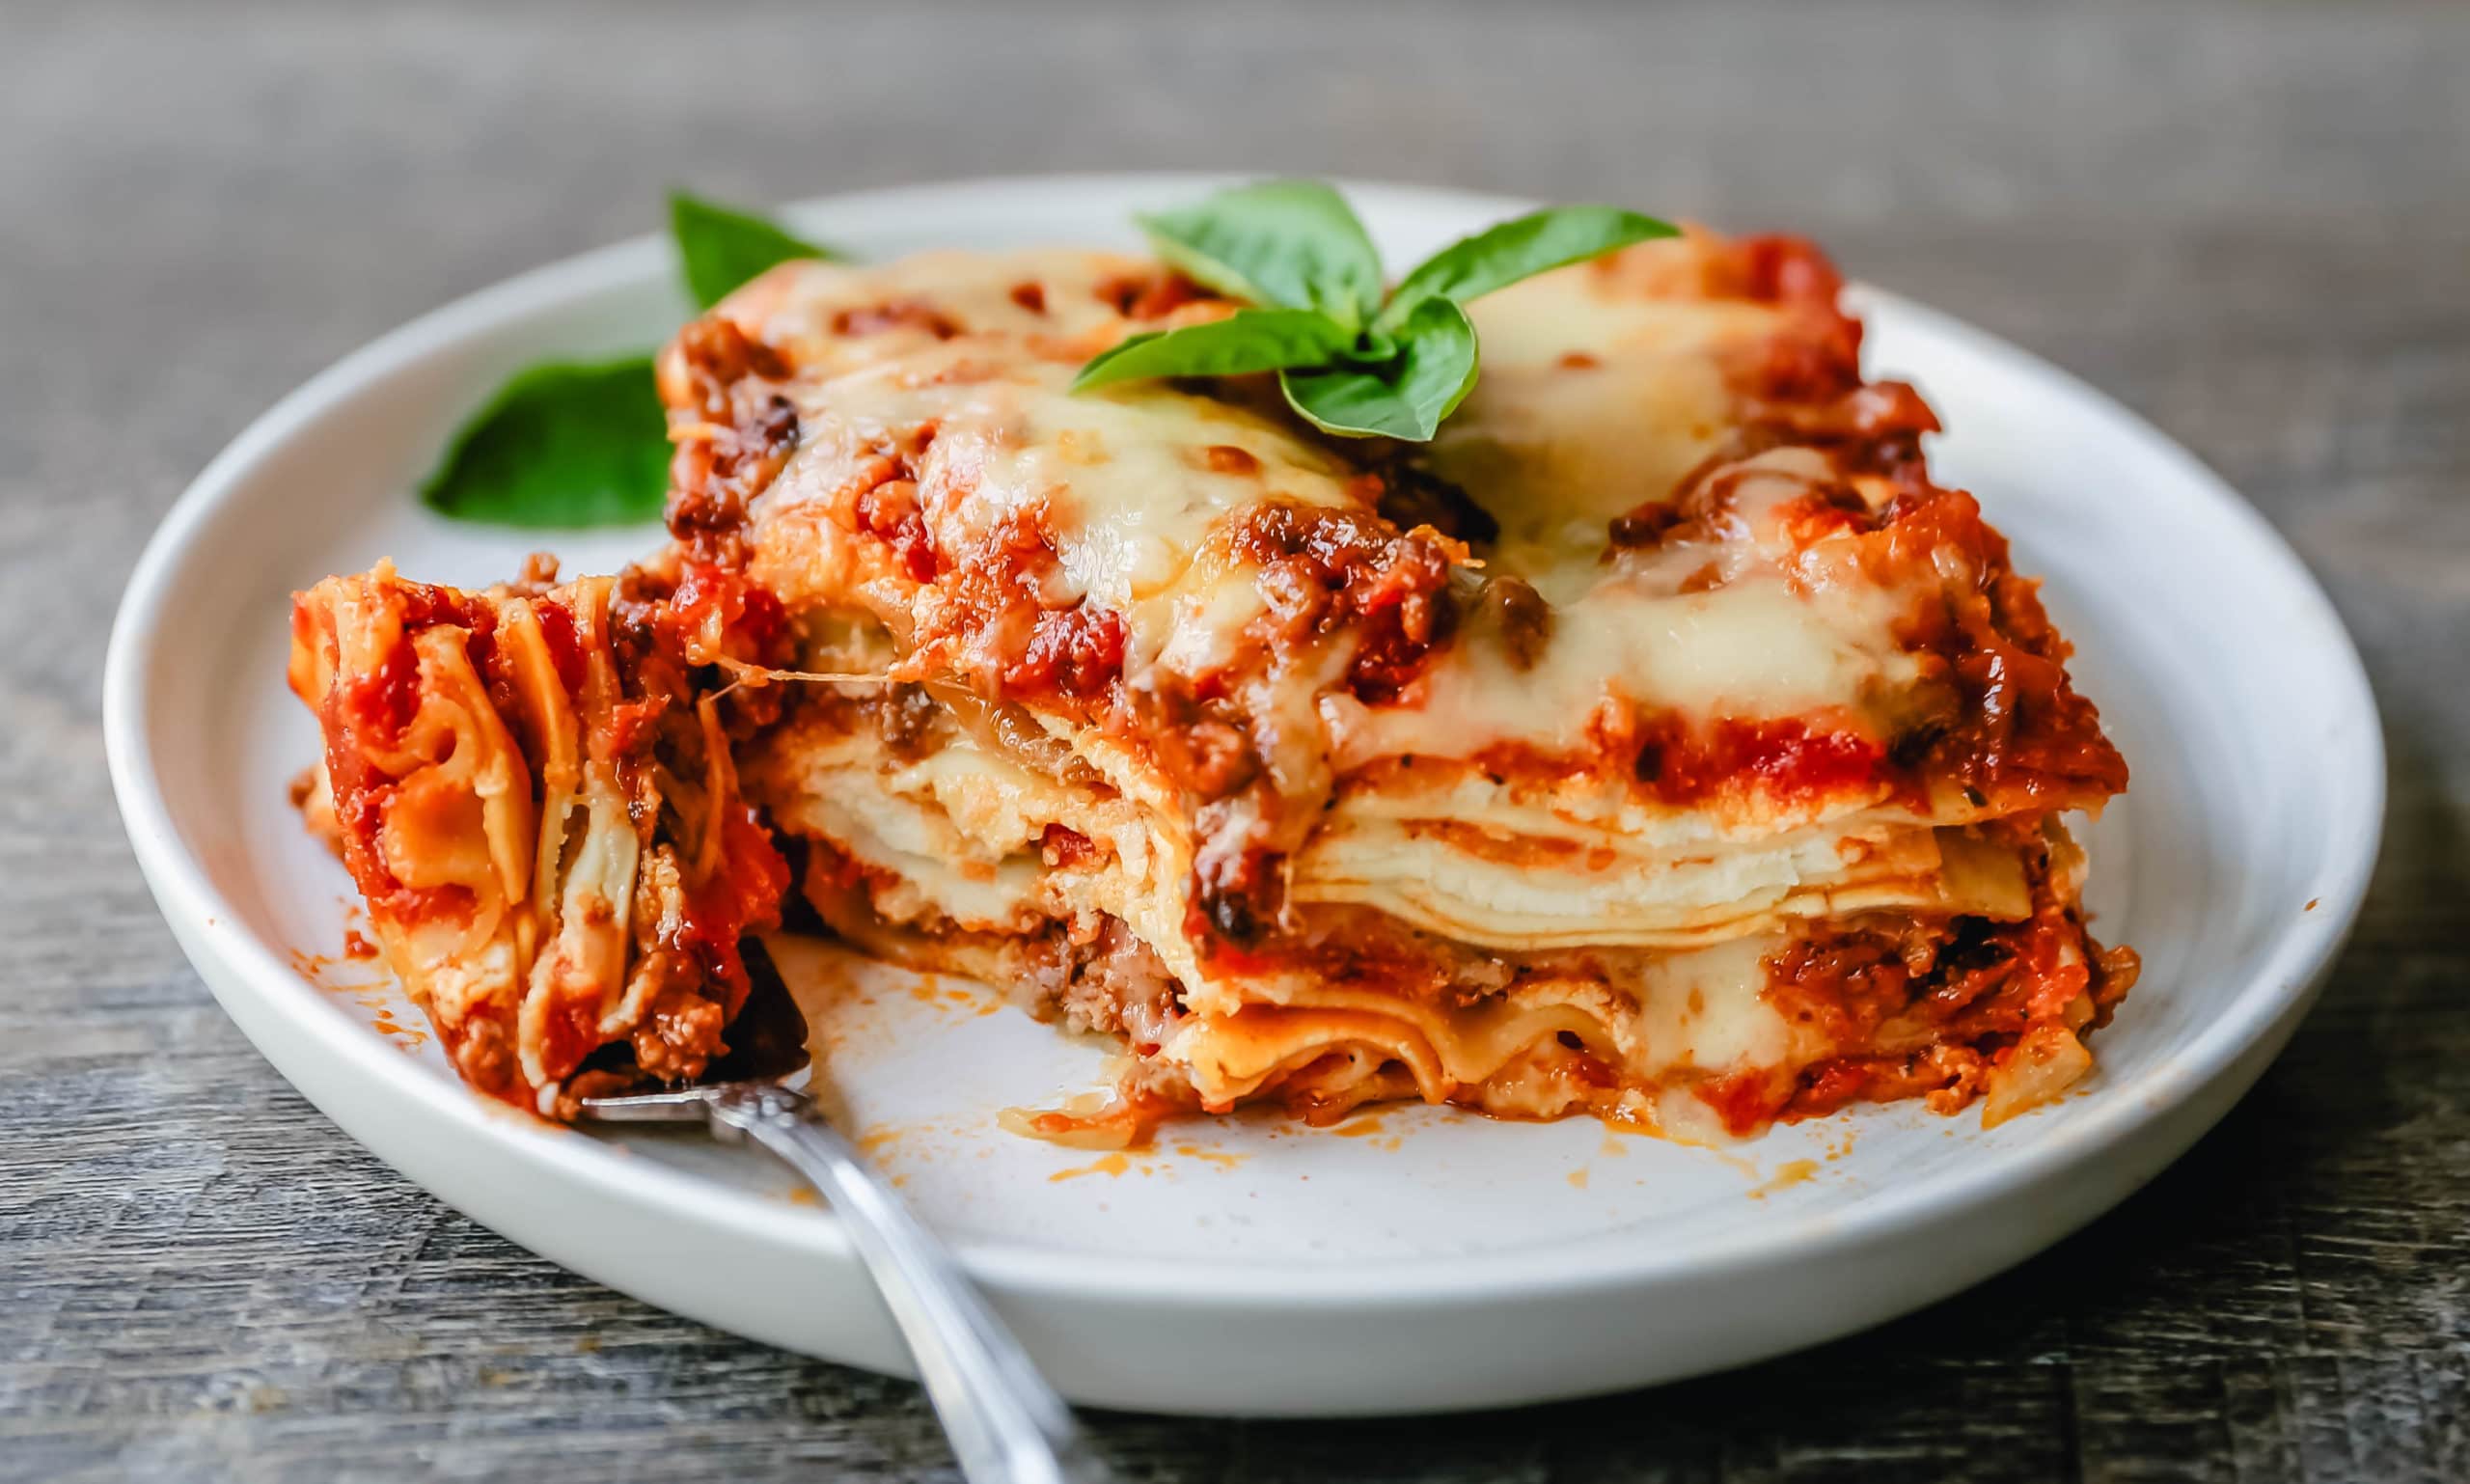 World's Best Lasagna Image